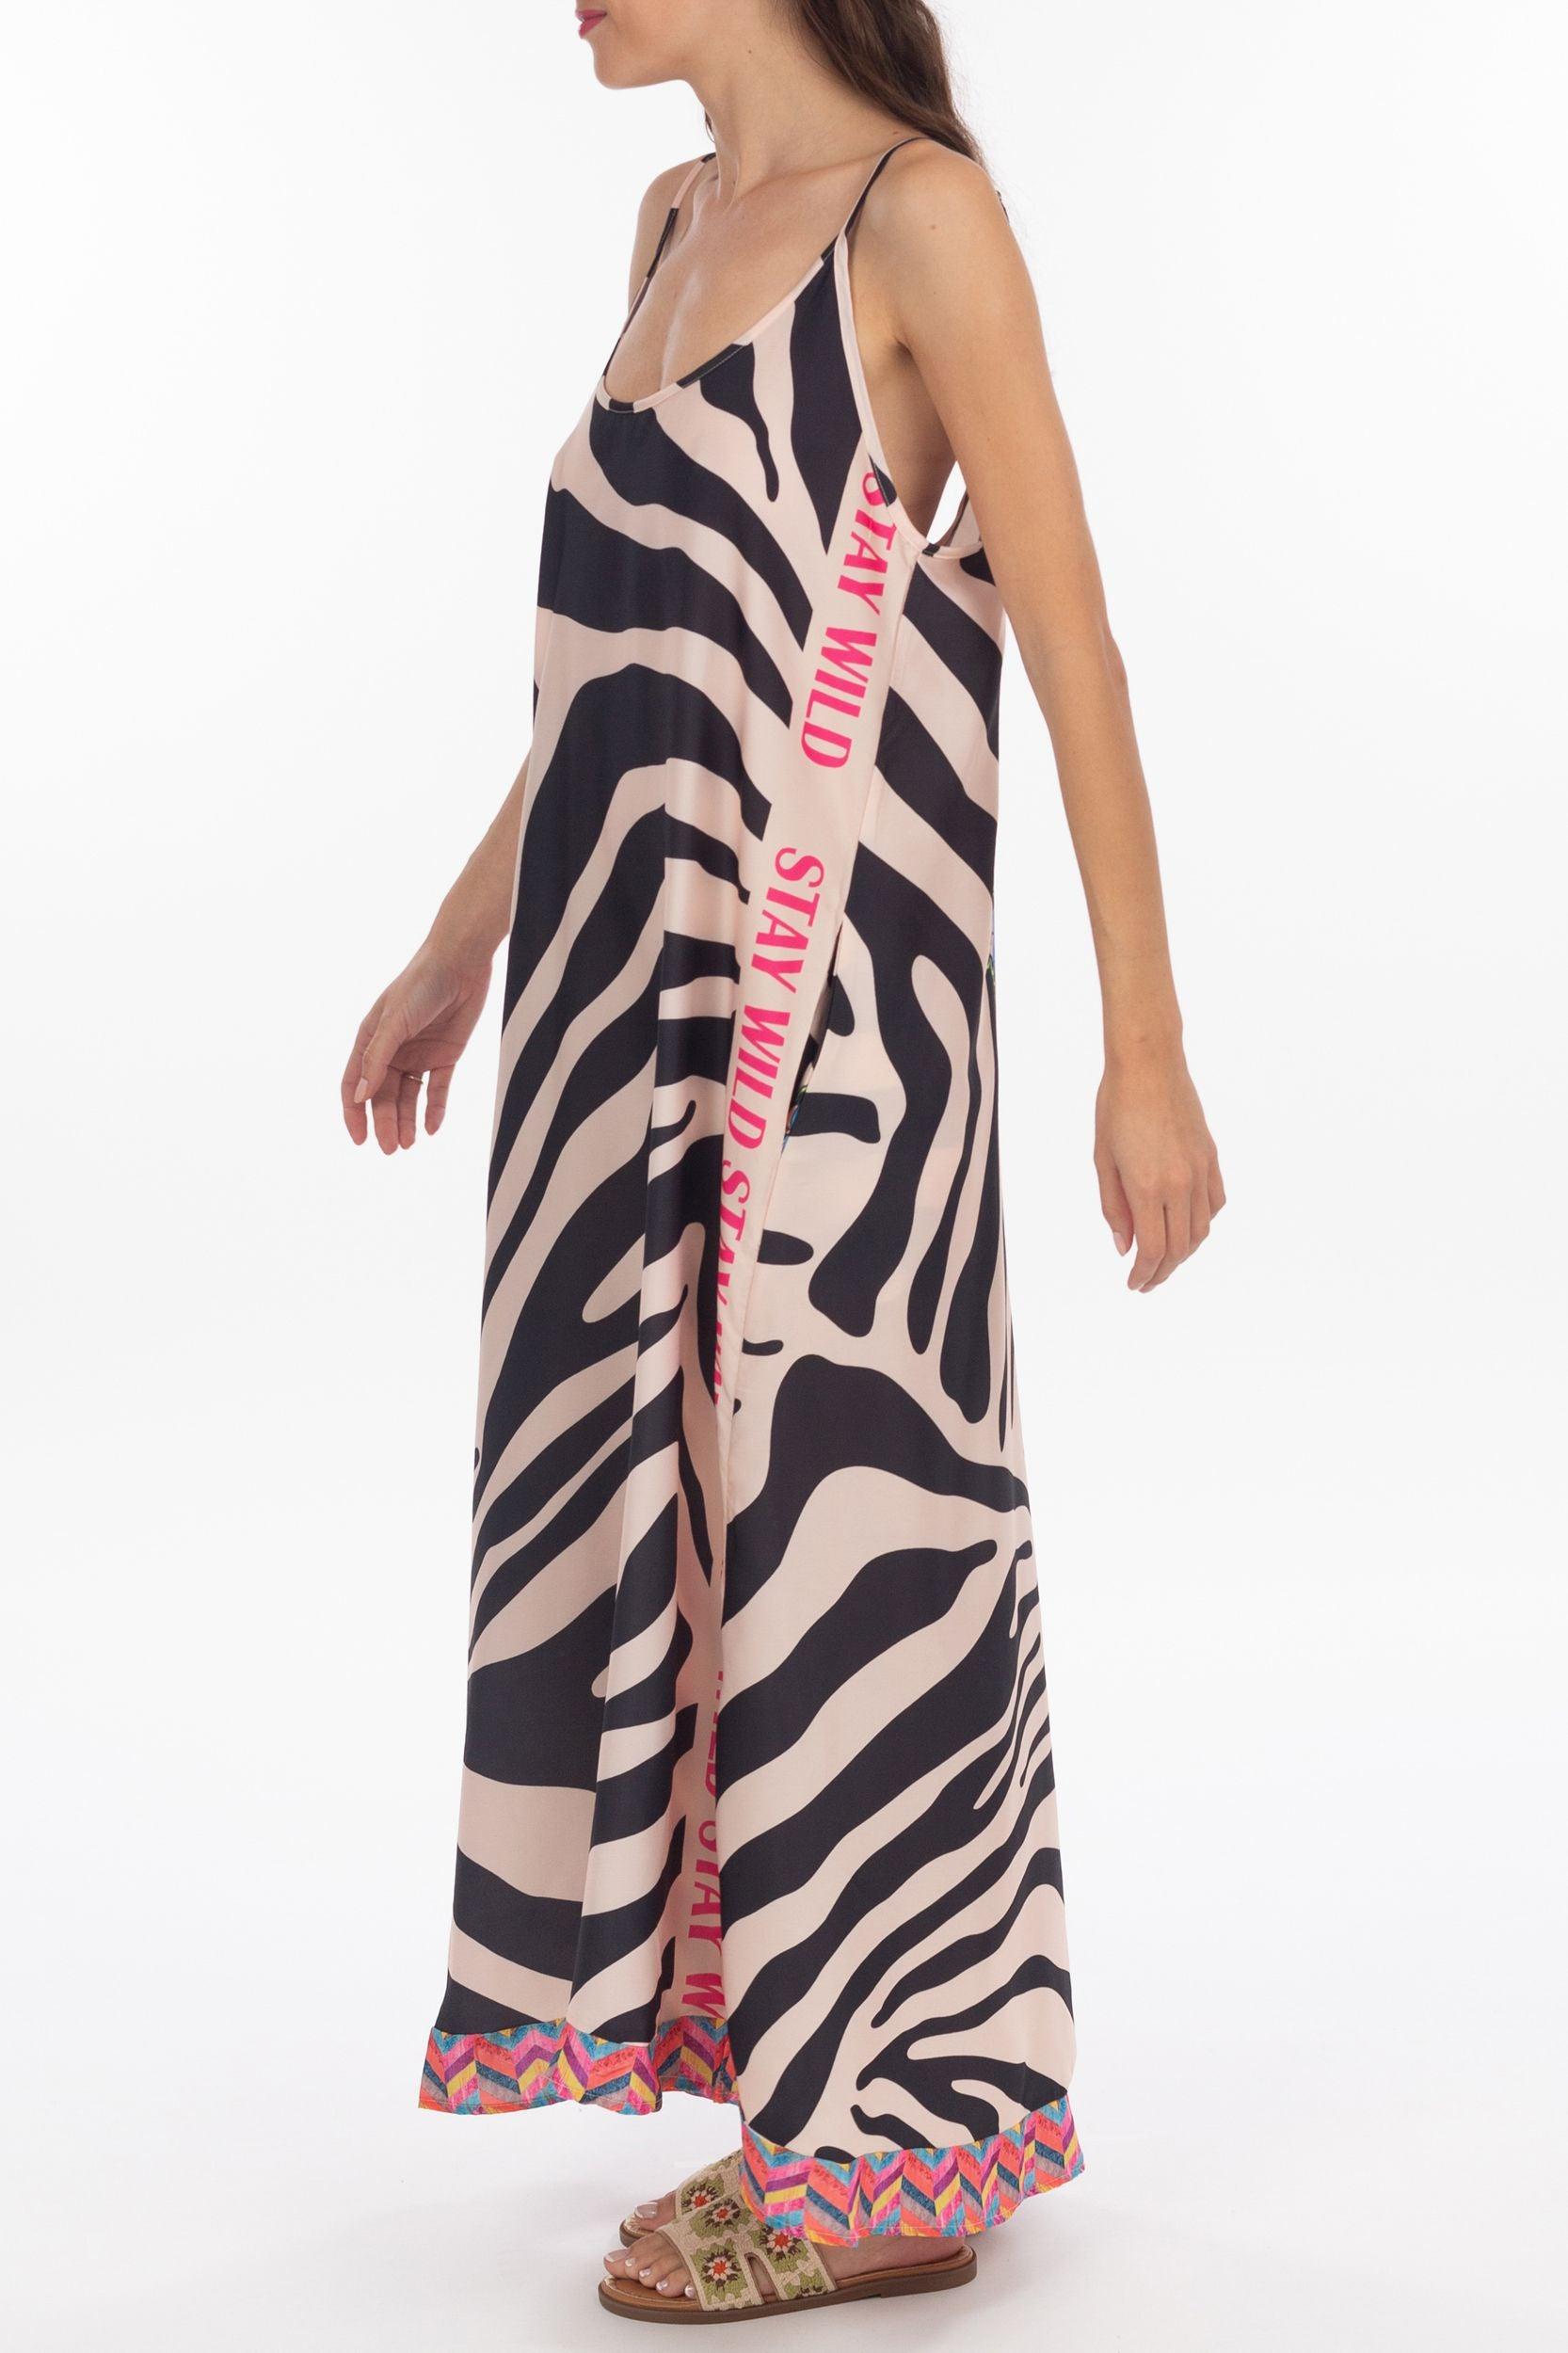 Viskosekleid mit Zebra-Muster - La Strada